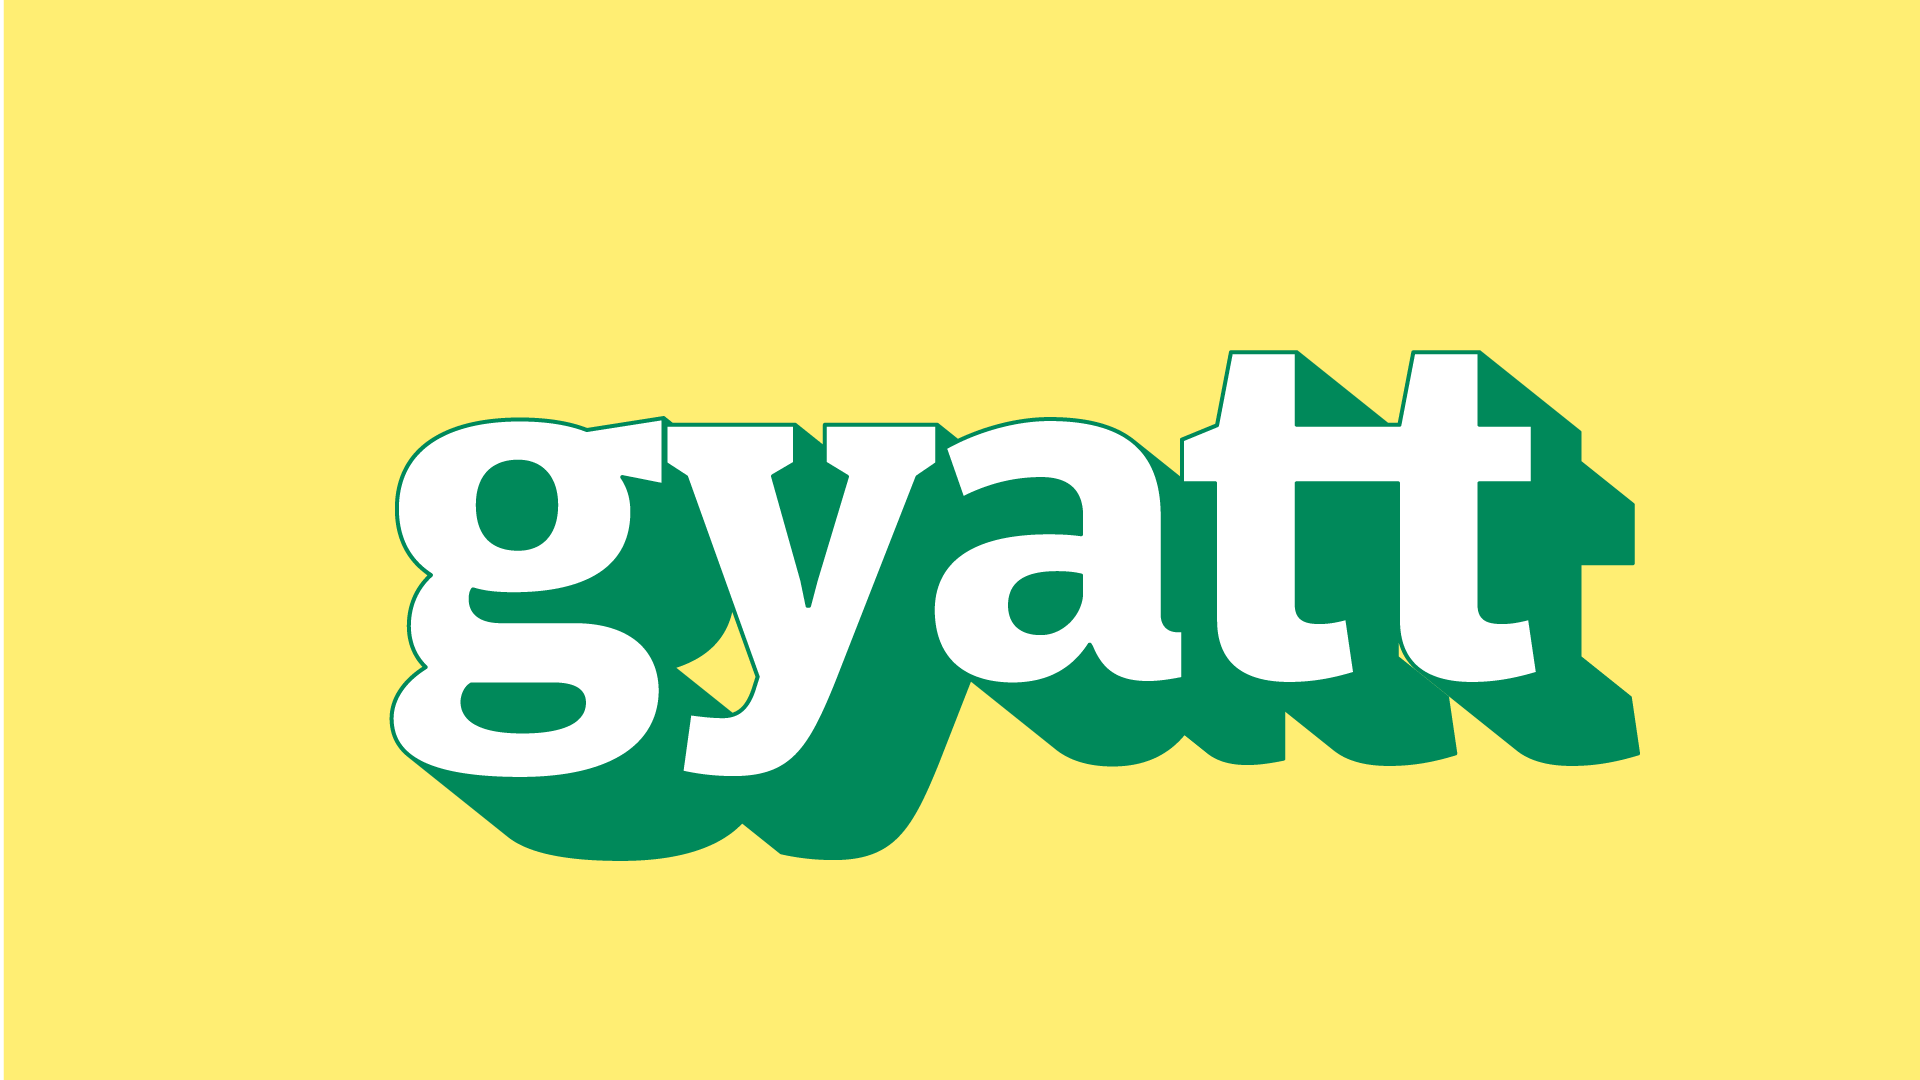 What does GYATT mean on TikTok?